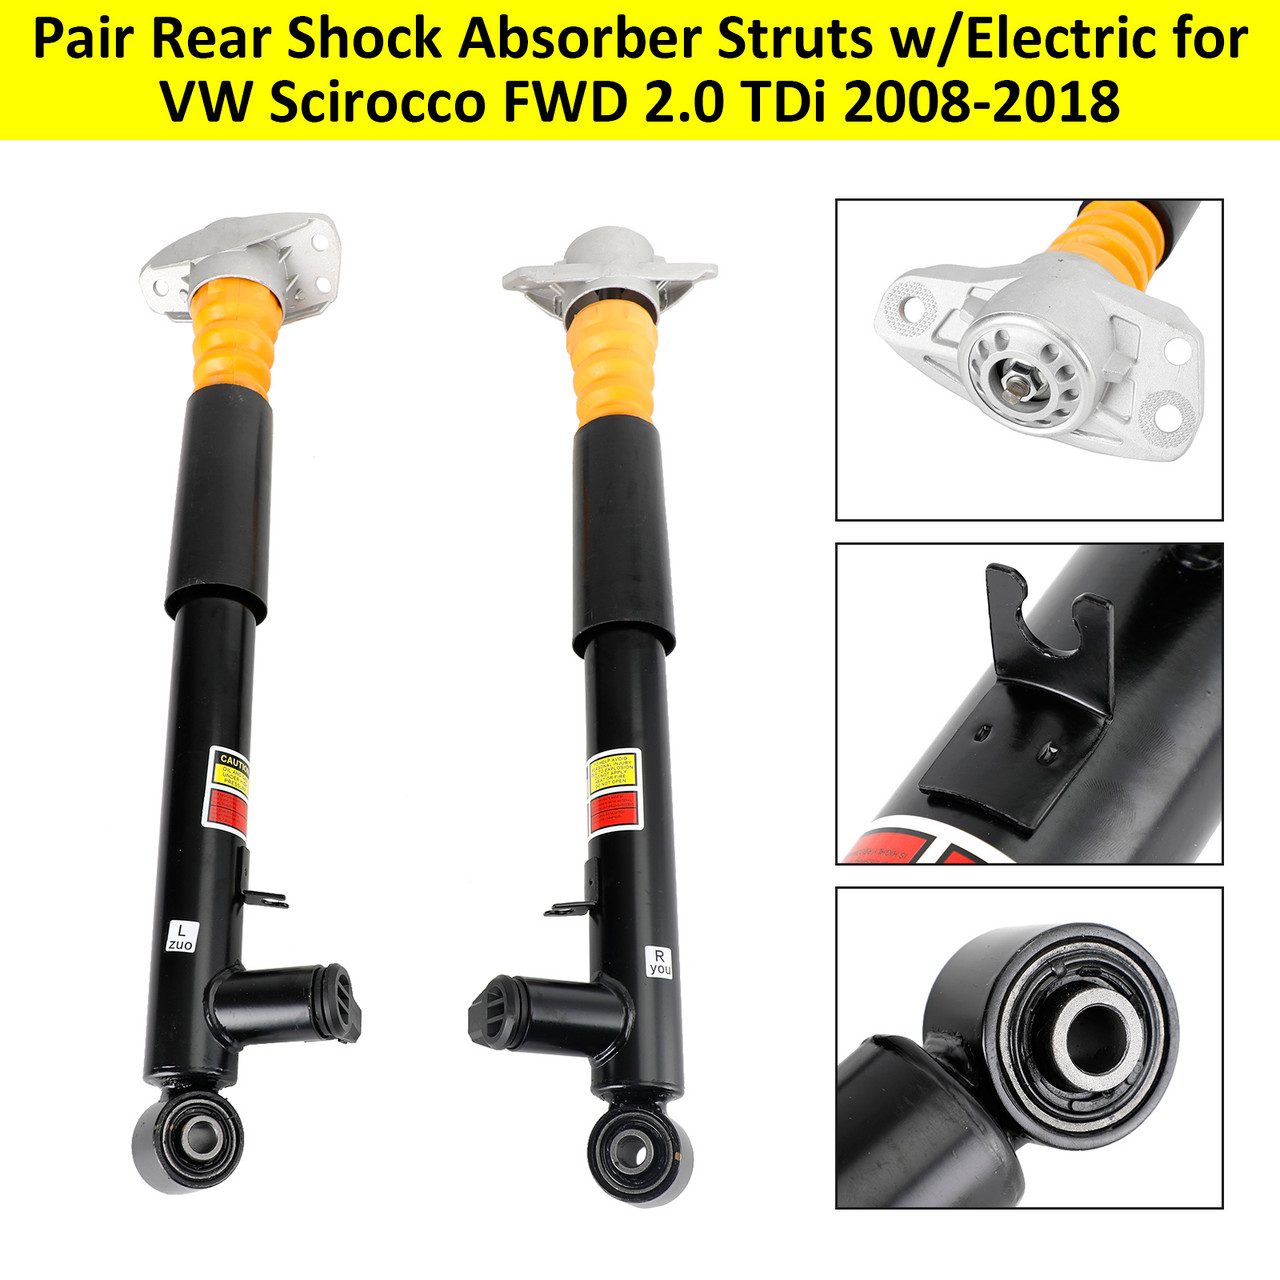 Pair Rear Shock Absorber Struts w/Electric VW Scirocco FWD 2.0 TDi 2008-2018